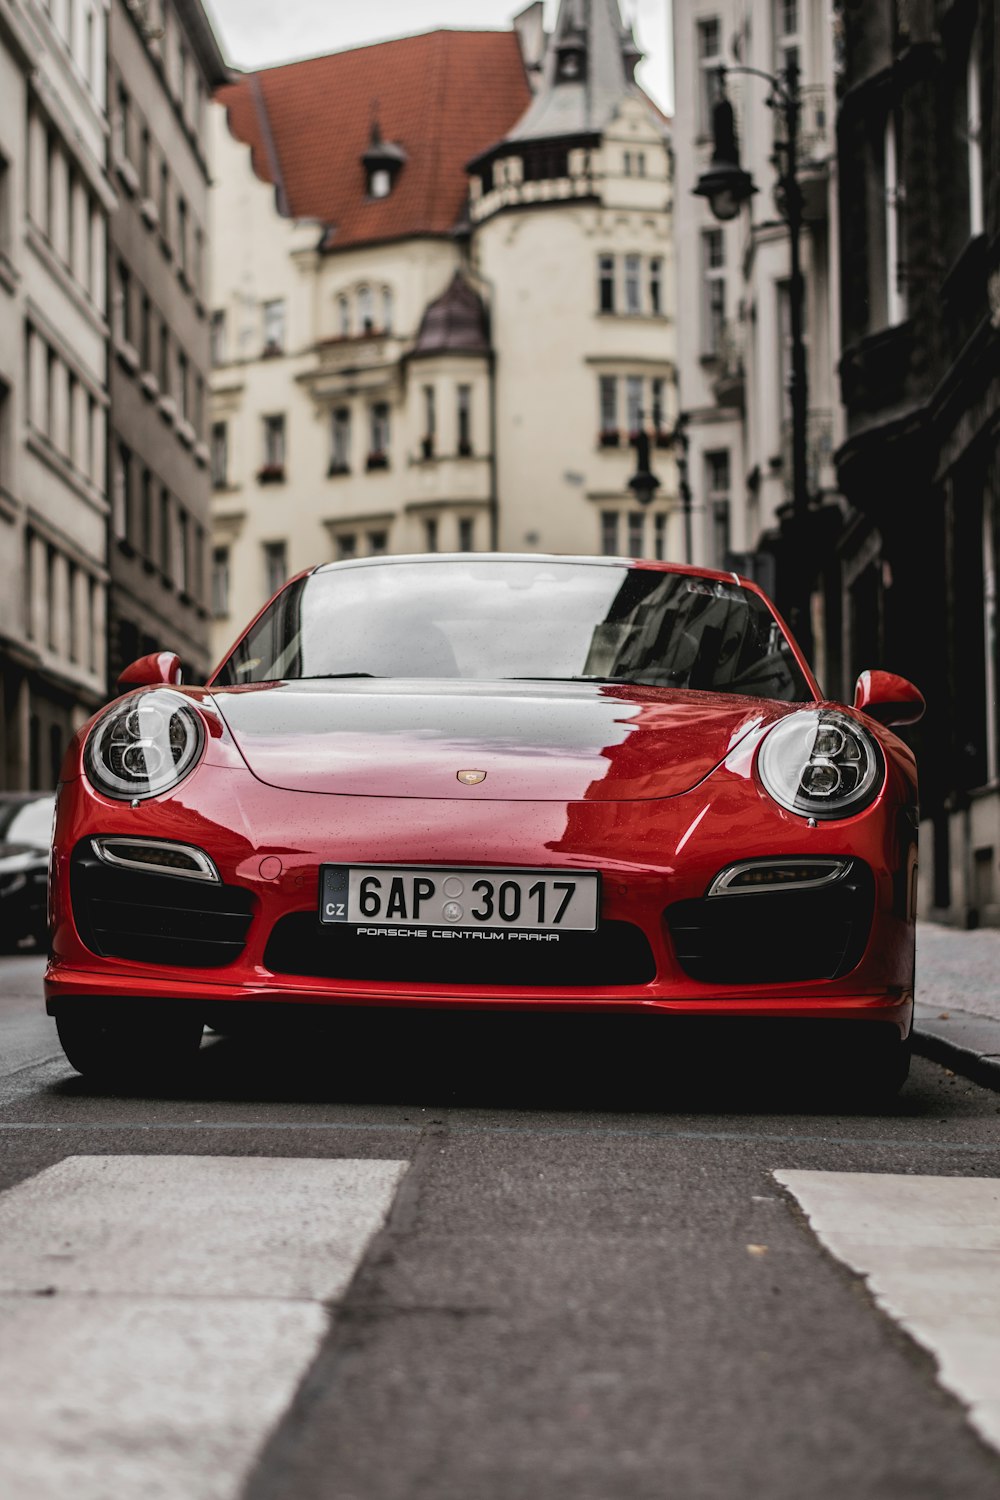 red Porsche vehicle during daytime photo – Free Car Image on Unsplash